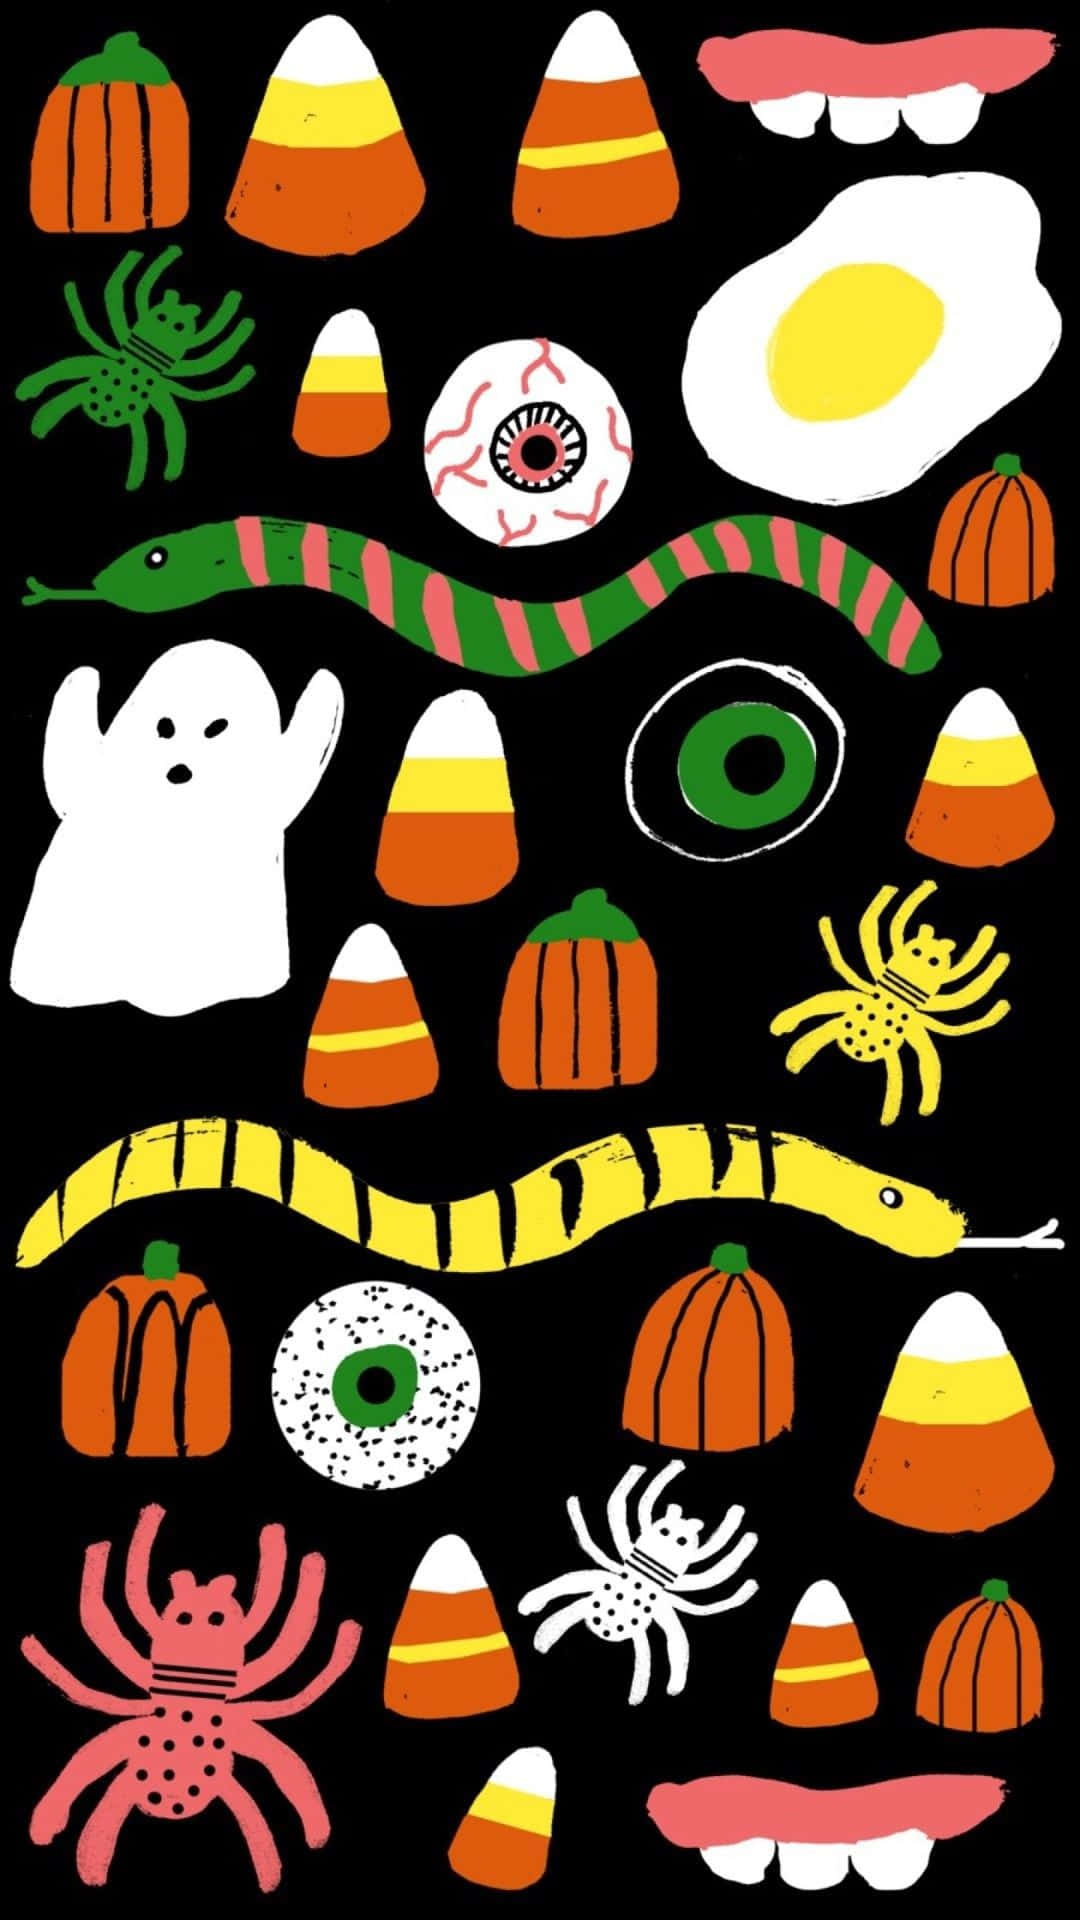 100+] Aesthetic Halloween Wallpapers 